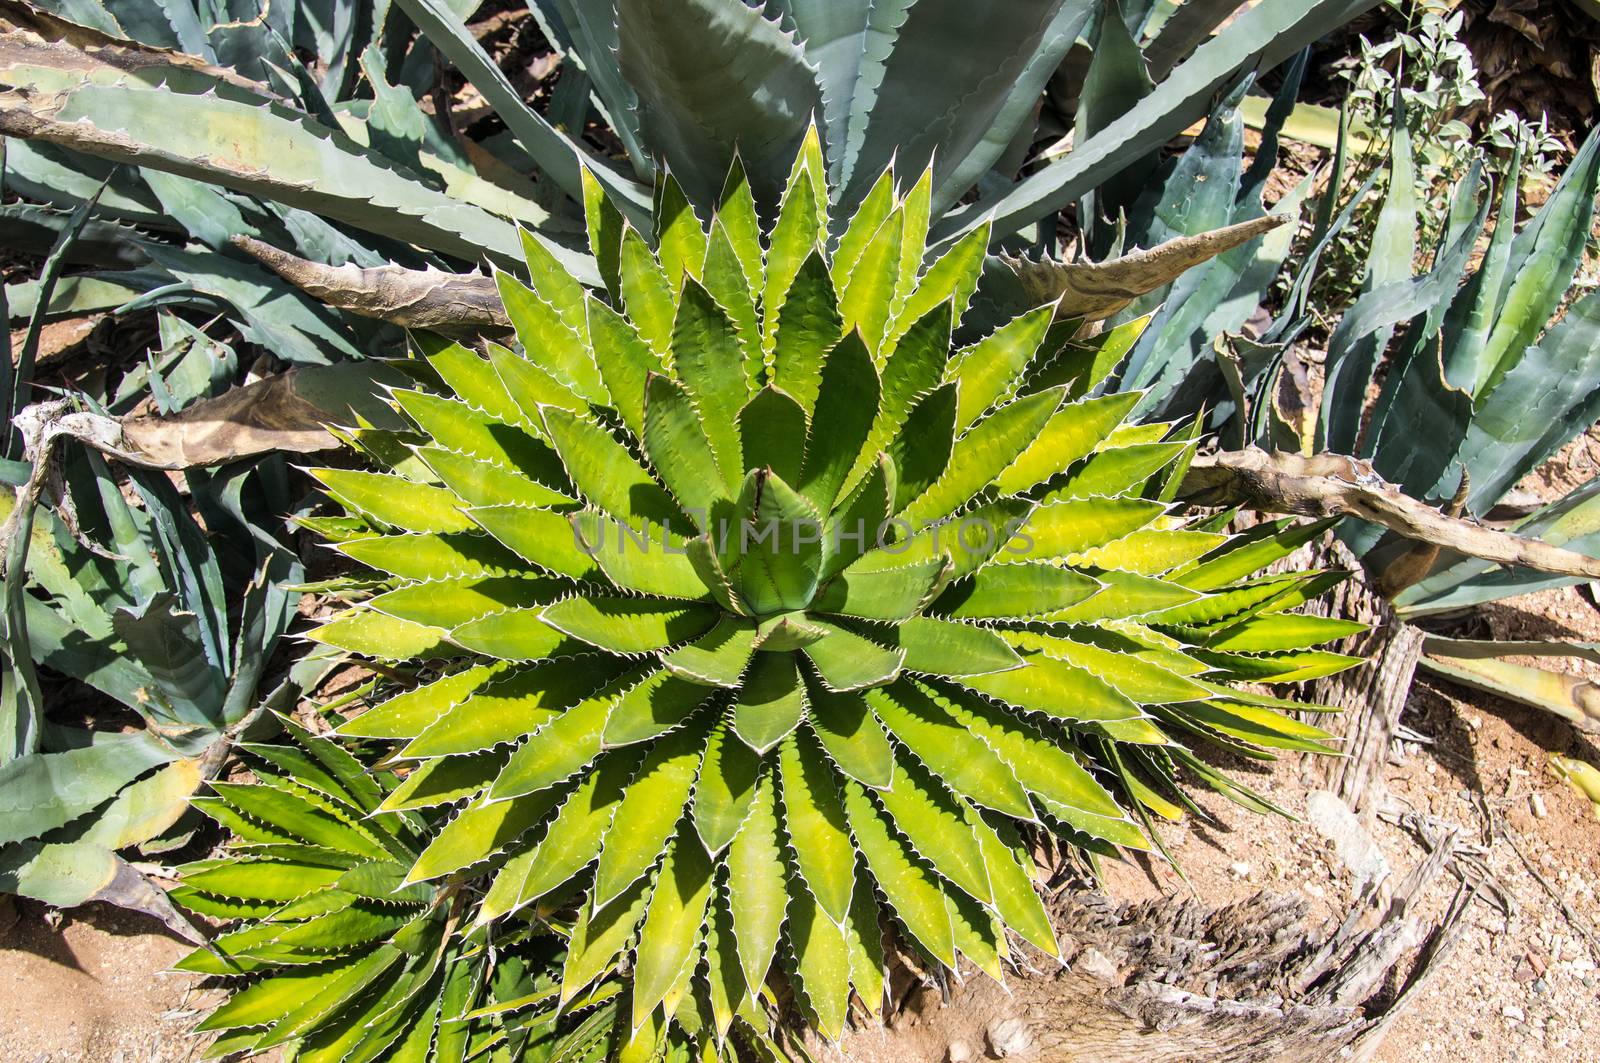 Verdant Cacti by emattil